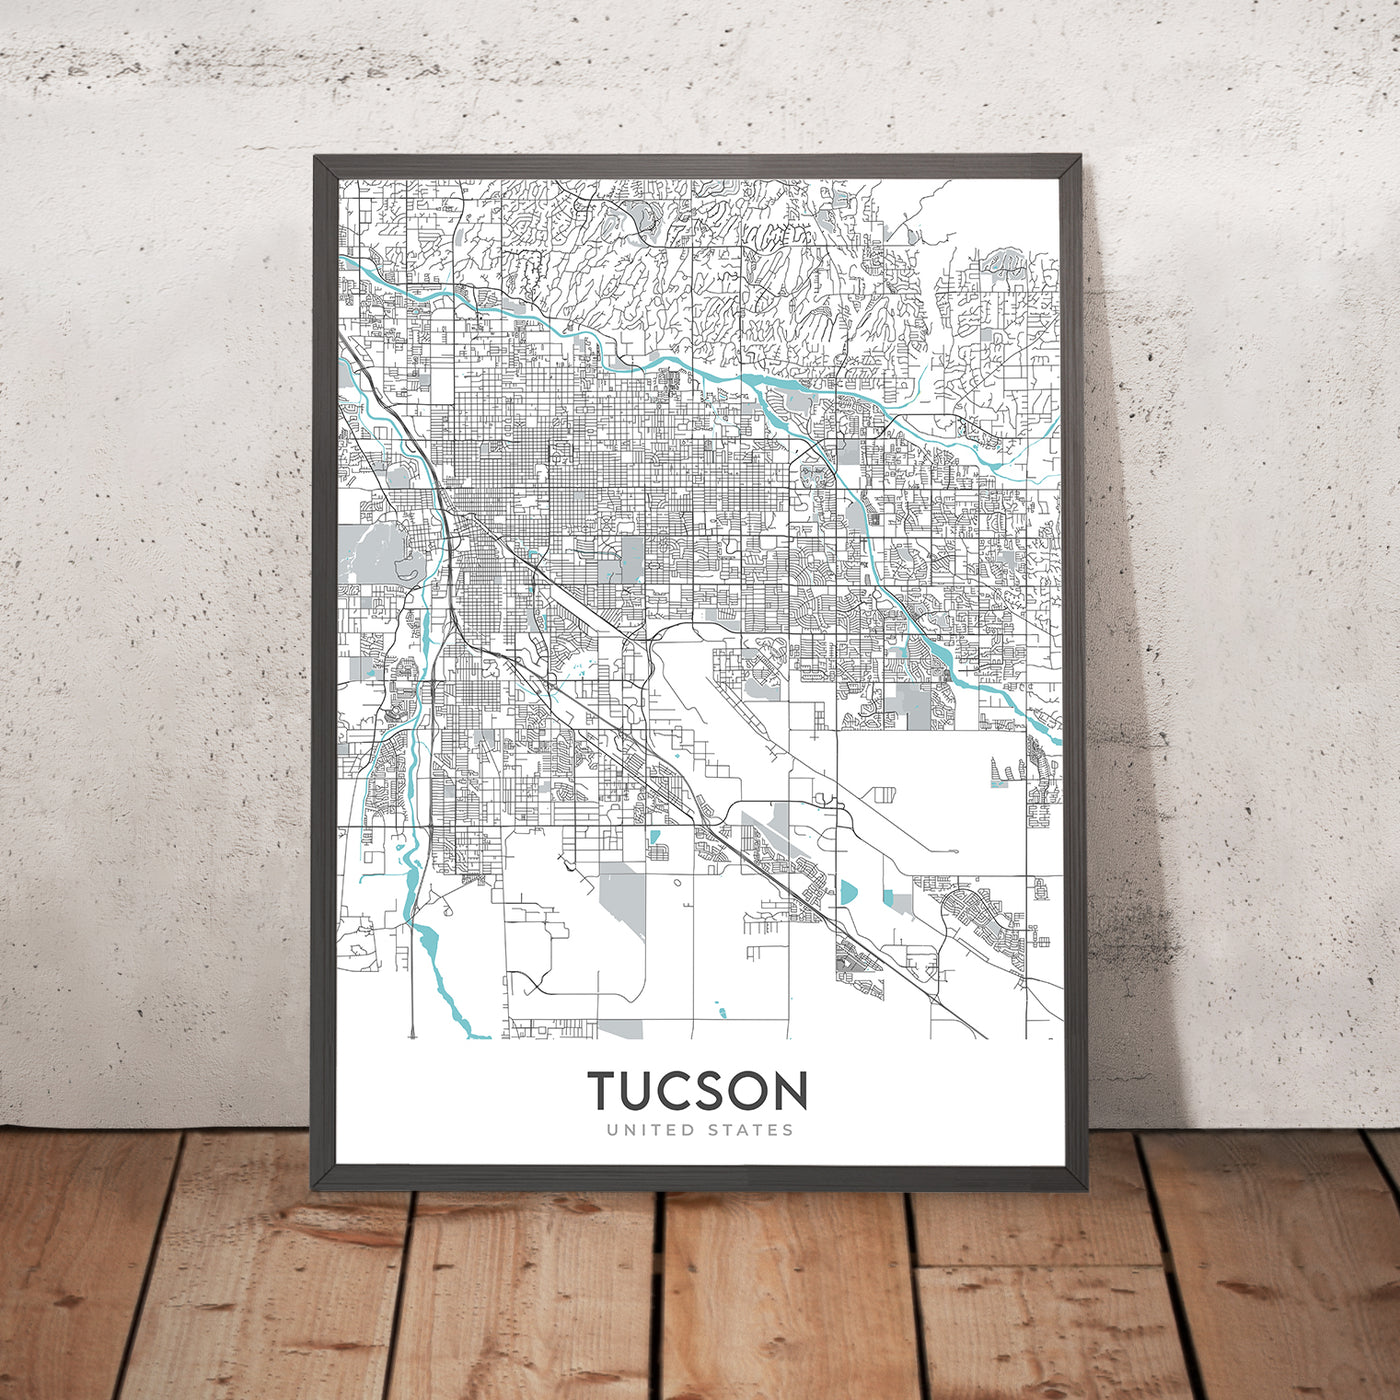 Modern City Map of Tucson, AZ: Univ of Arizona, Pima Air & Space Museum, Saguaro NP, Sabino Canyon, Mount Lemmon